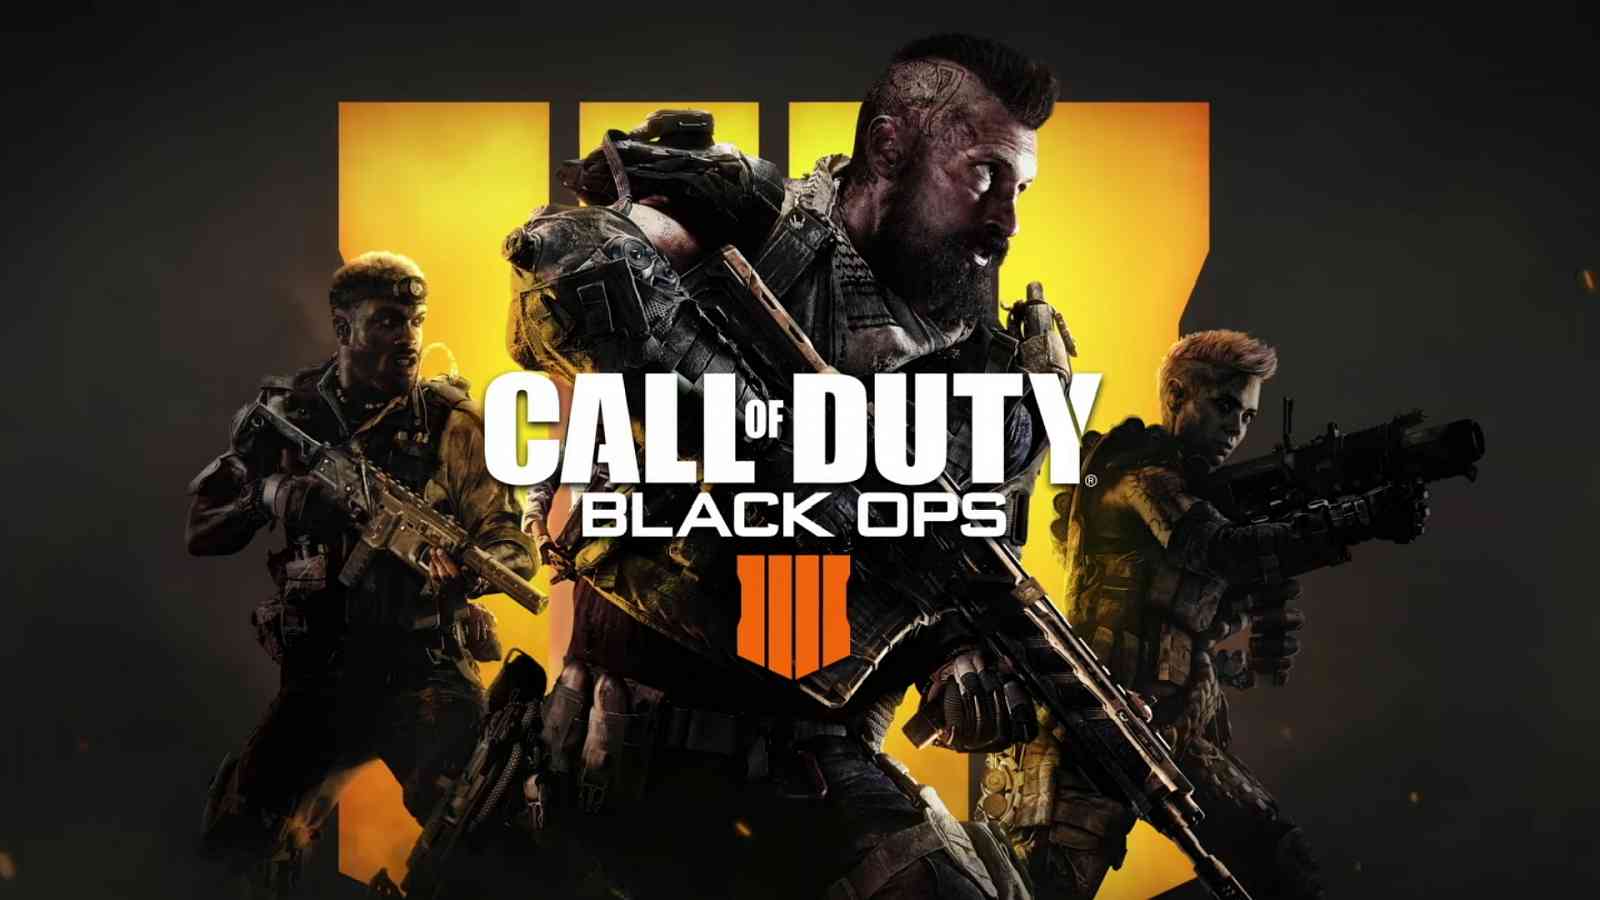 Vrátí se kampaň do série Call of Duty: Black Ops?